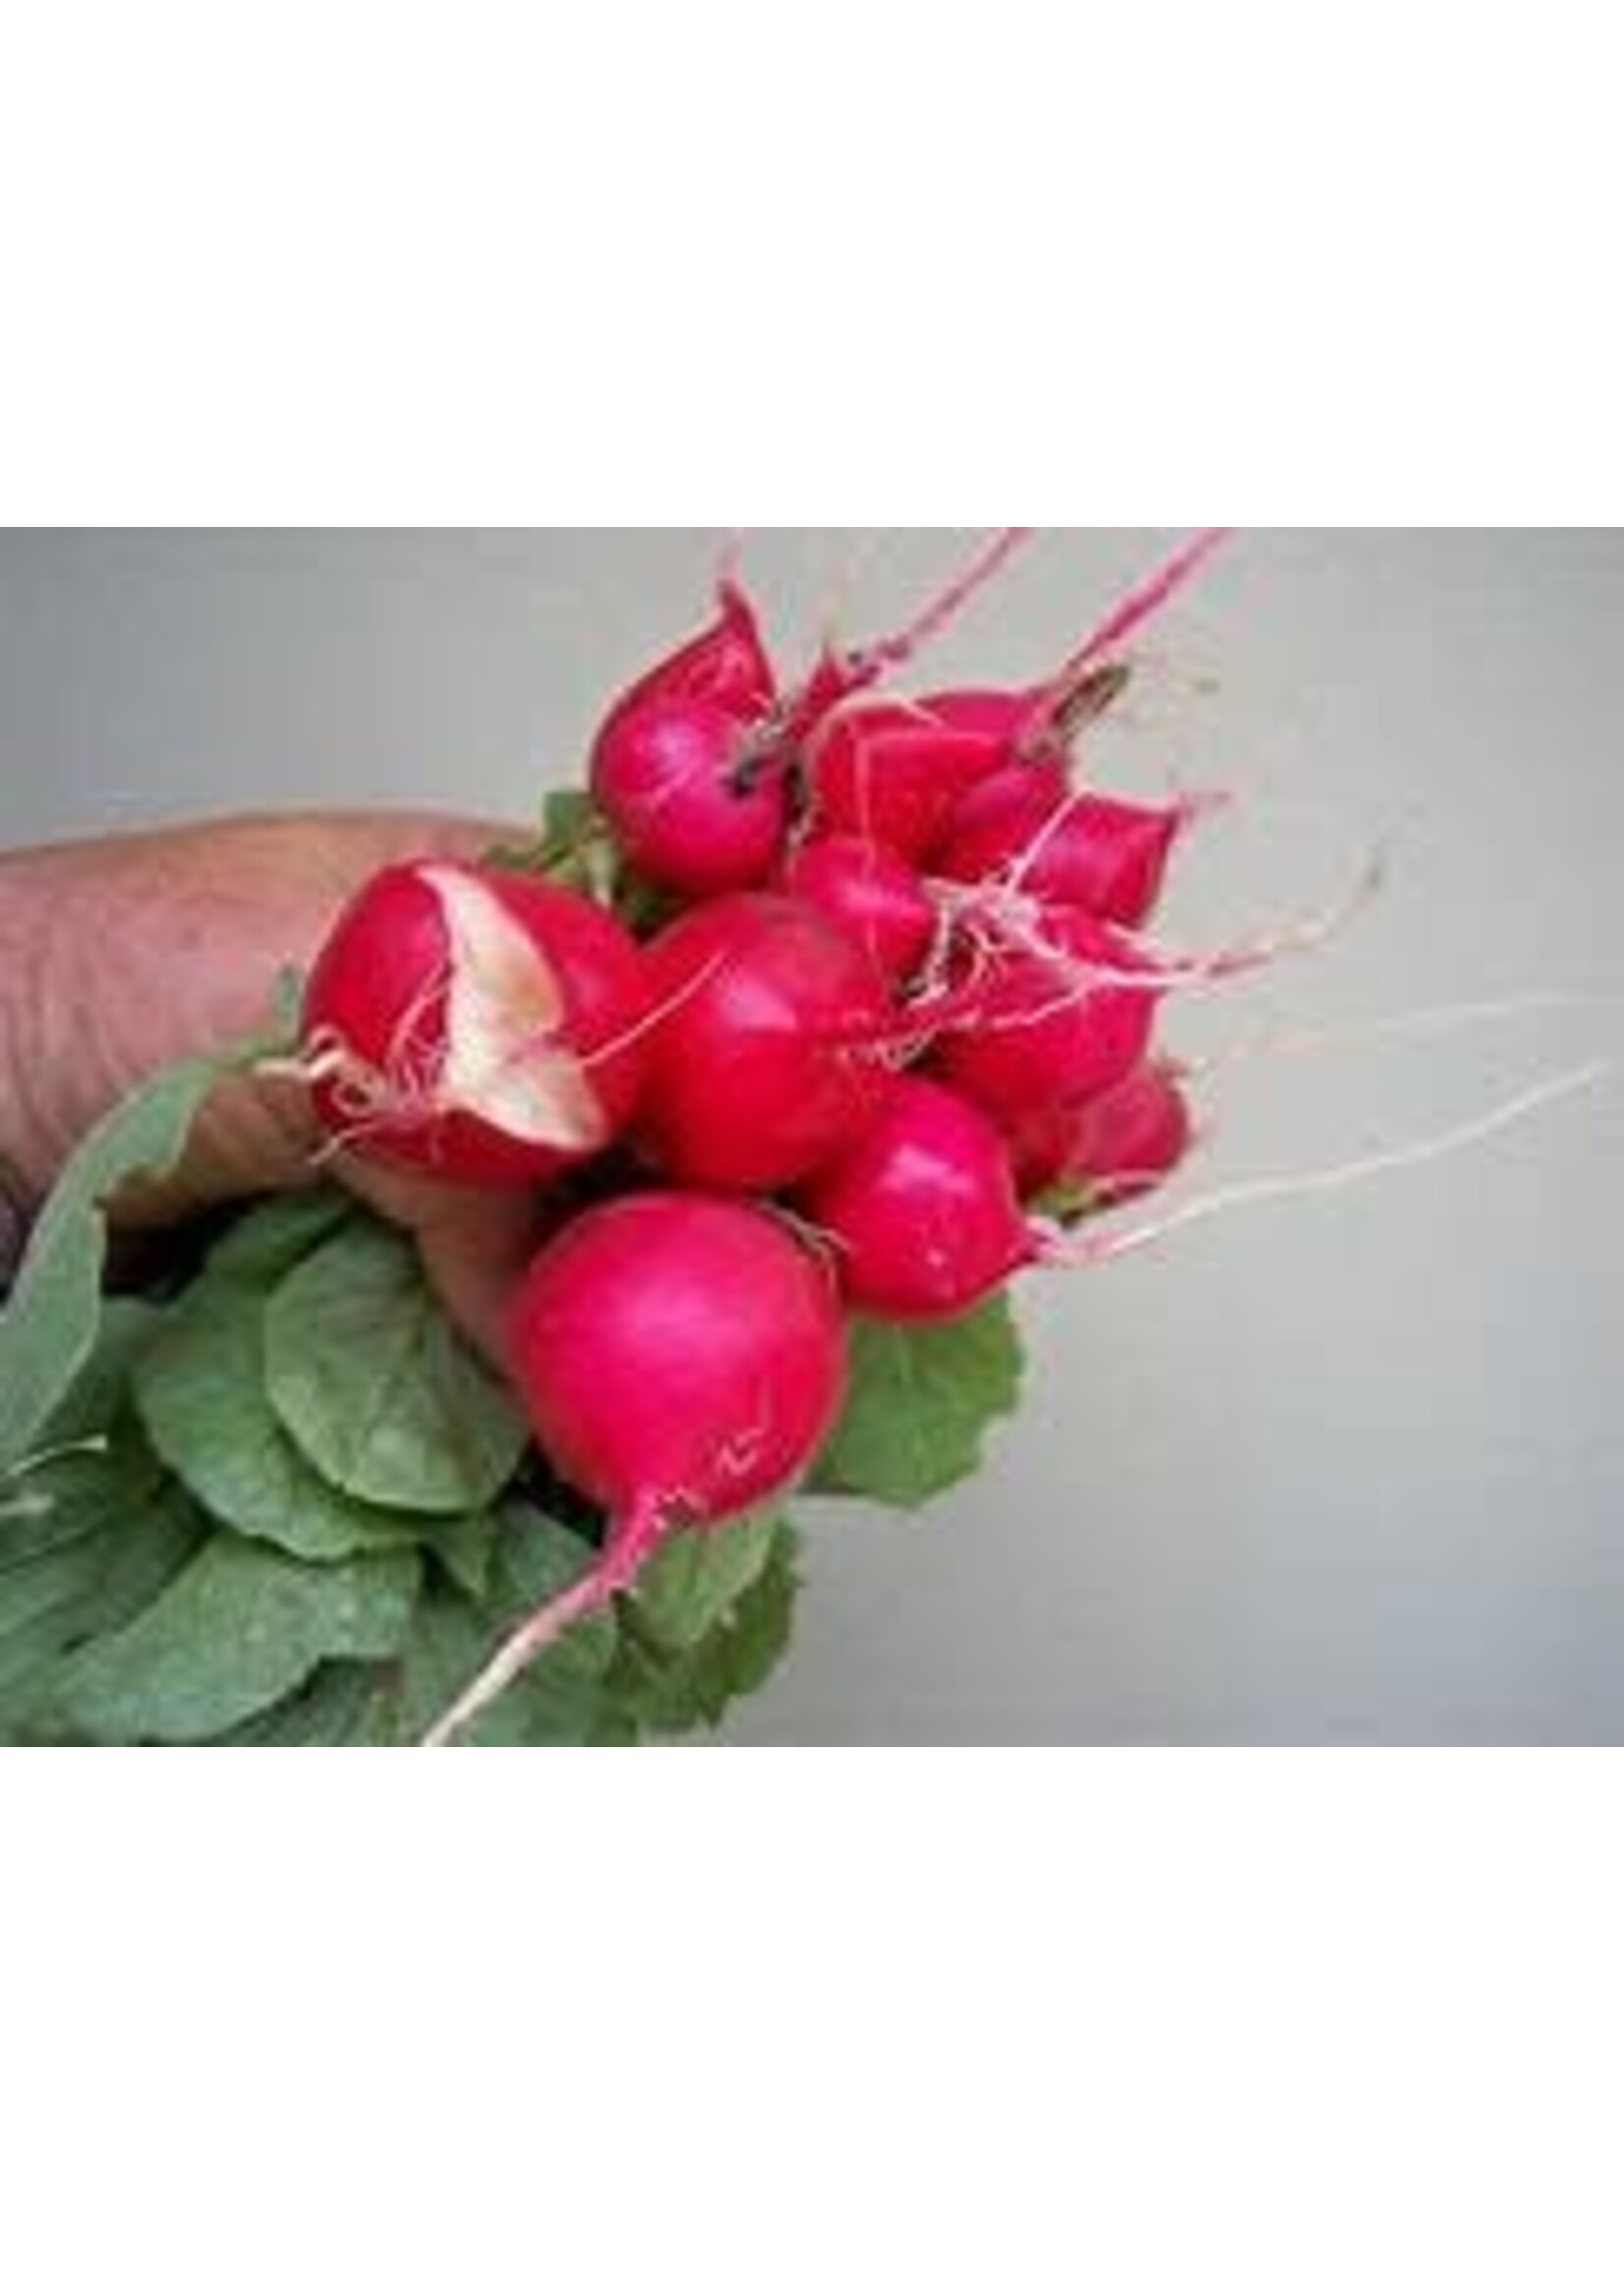 Heirloom Seeds(BIRRI) Radish – Red Cherry Belle